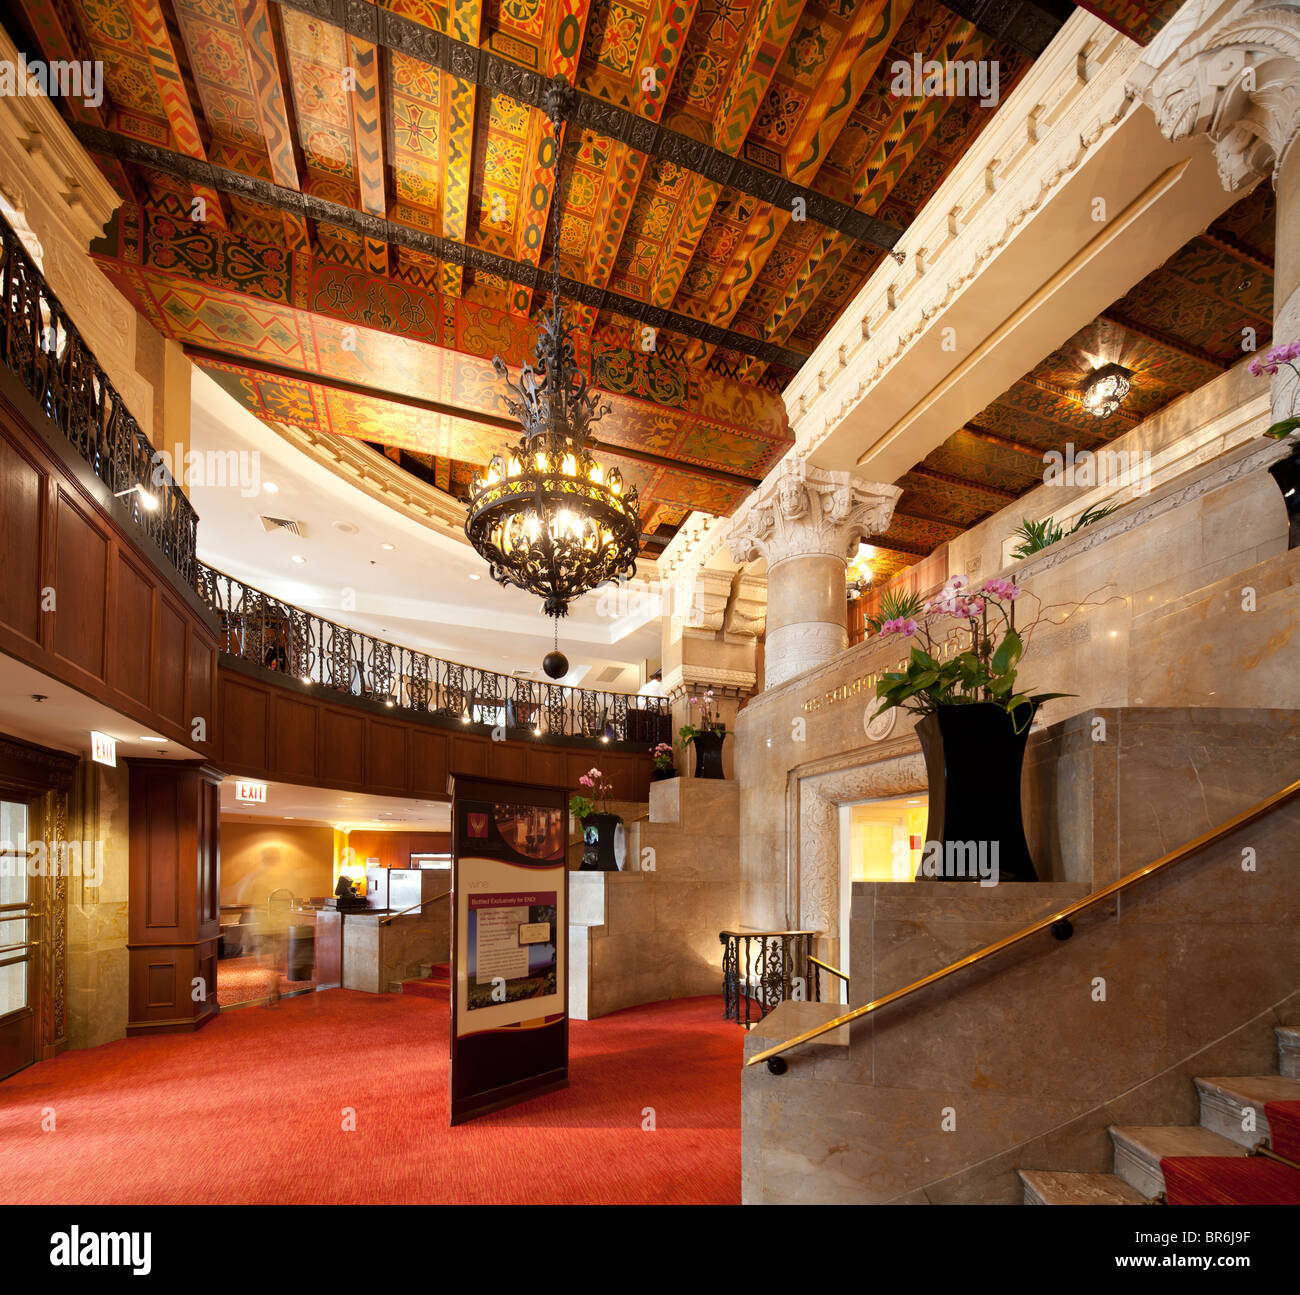 Lobby des Hotels Intercontinental, ehemals die Shriner Medinah Athletic Club, Norrth Michigan Avenue in Chicago Stockfoto